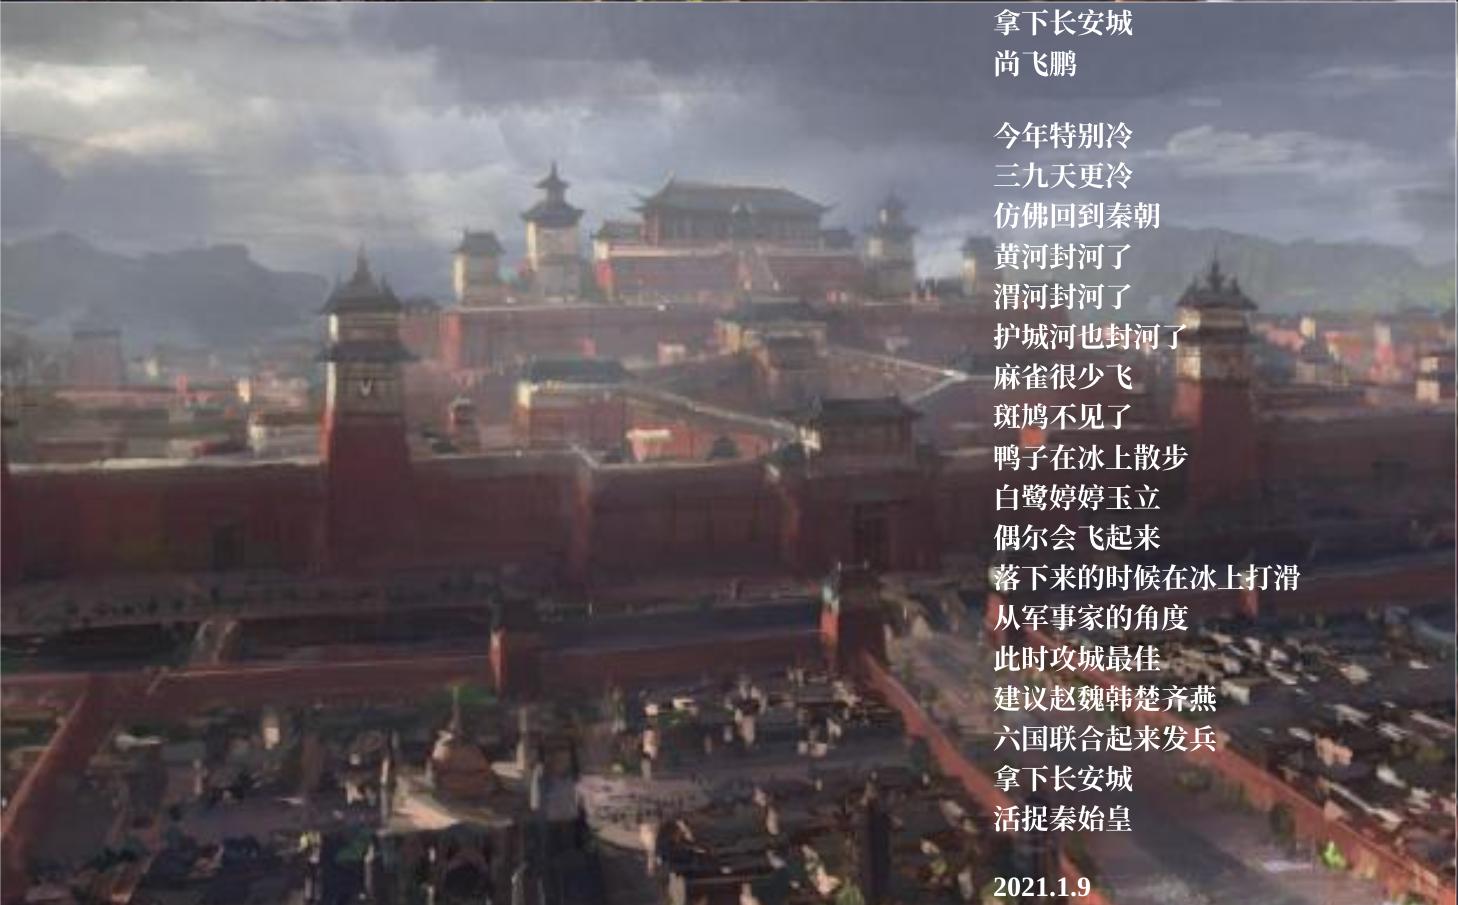 Conquer Chang'an